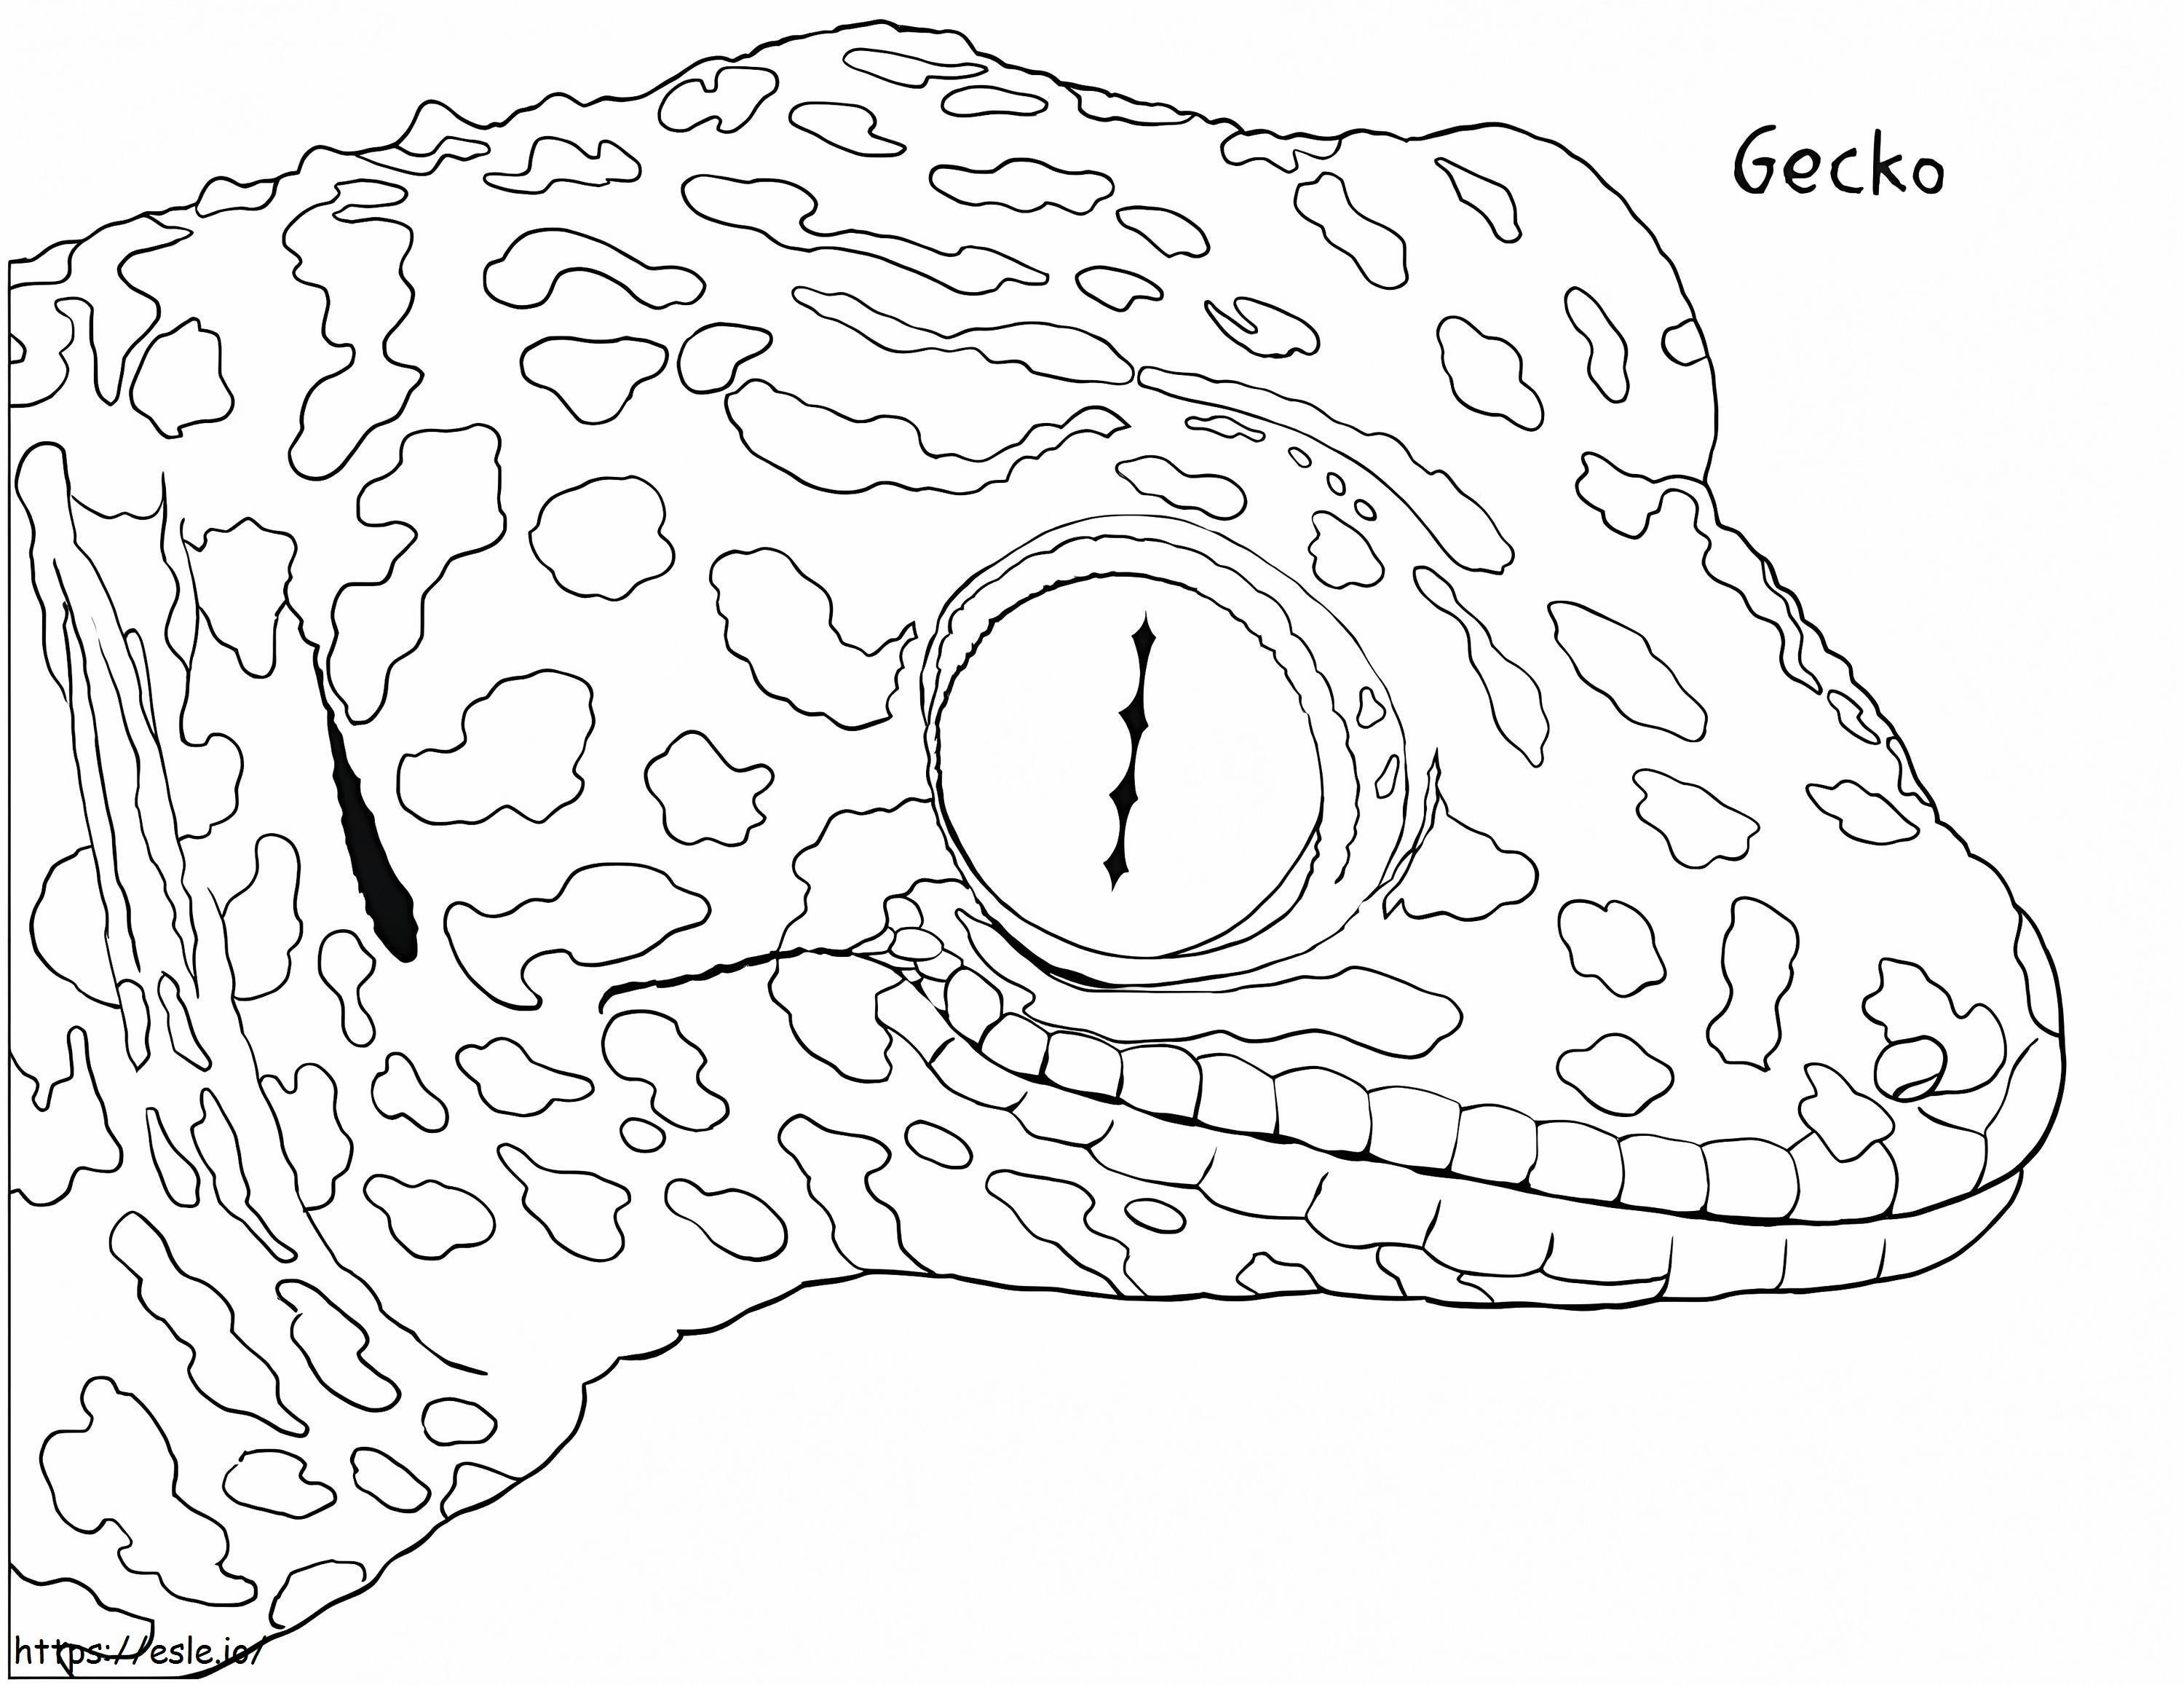 Common Tokay Gecko coloring page